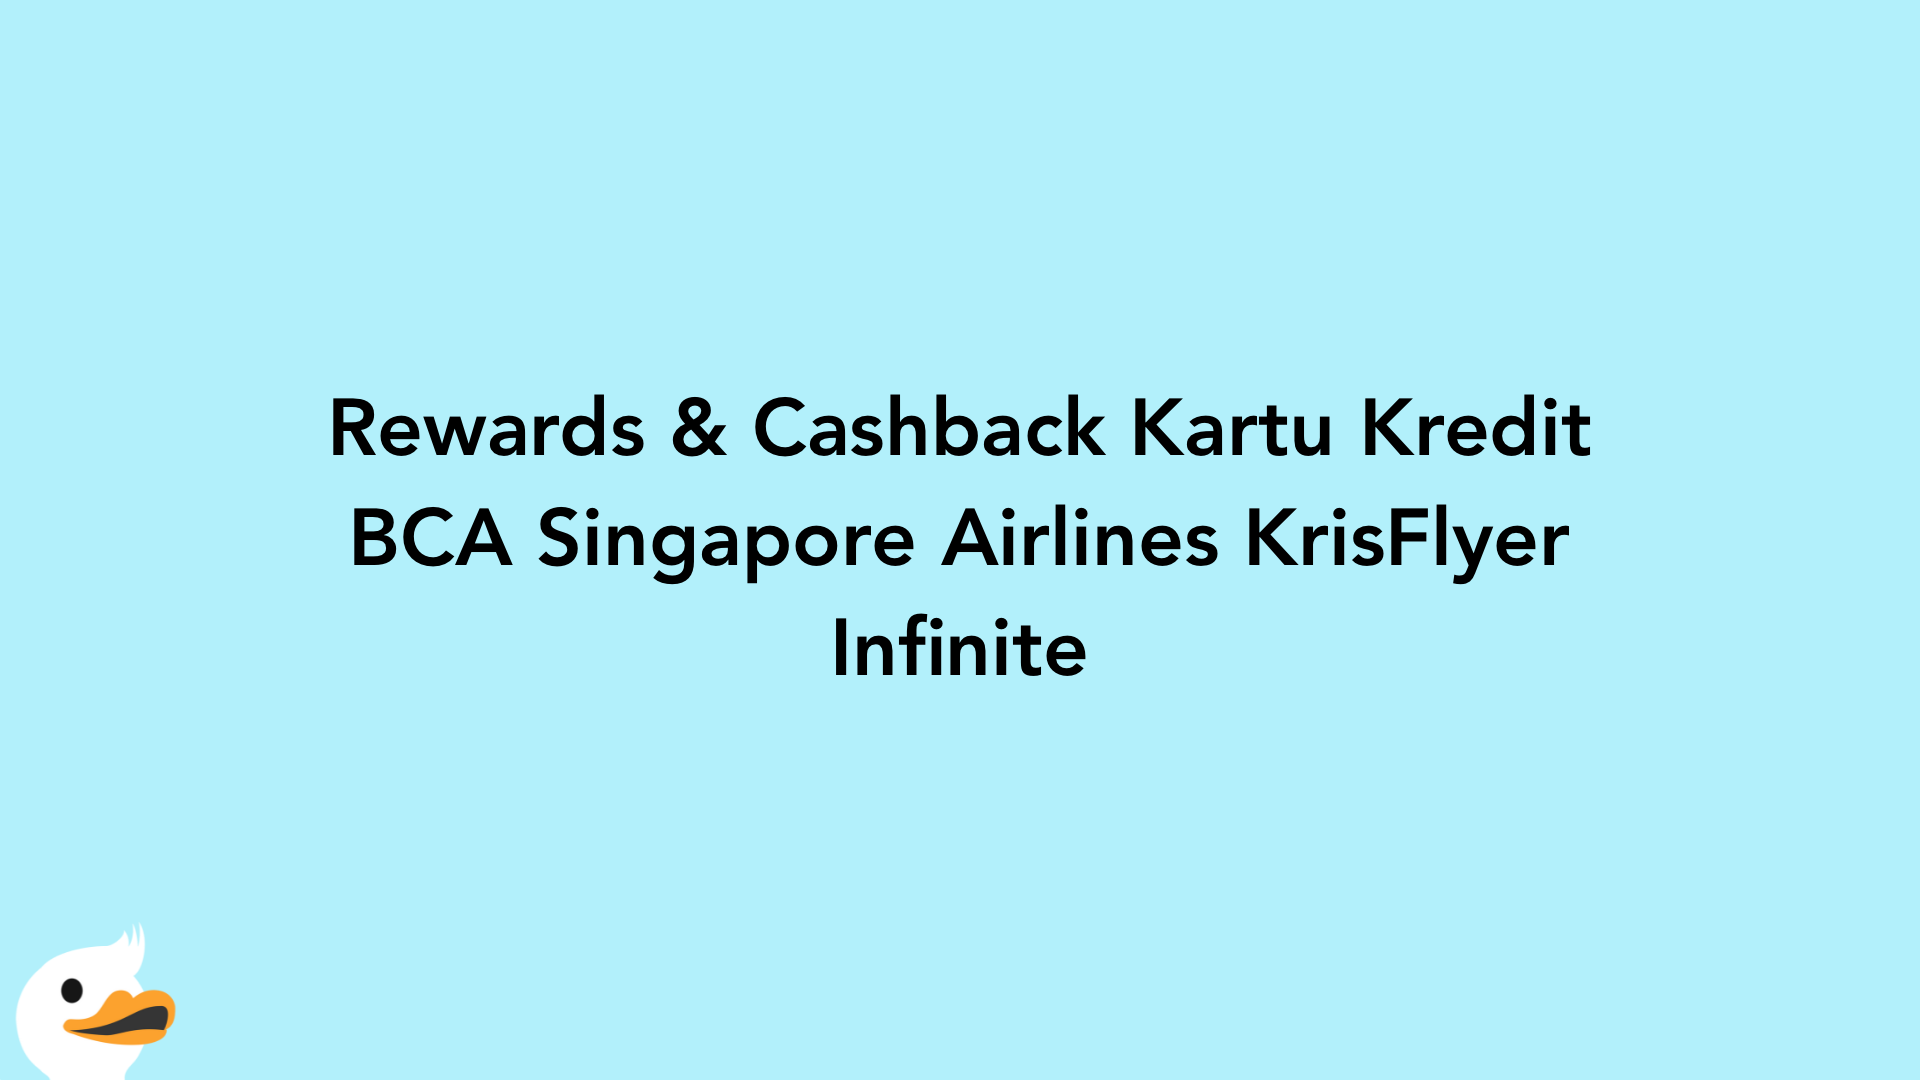 Rewards & Cashback Kartu Kredit BCA Singapore Airlines KrisFlyer Infinite